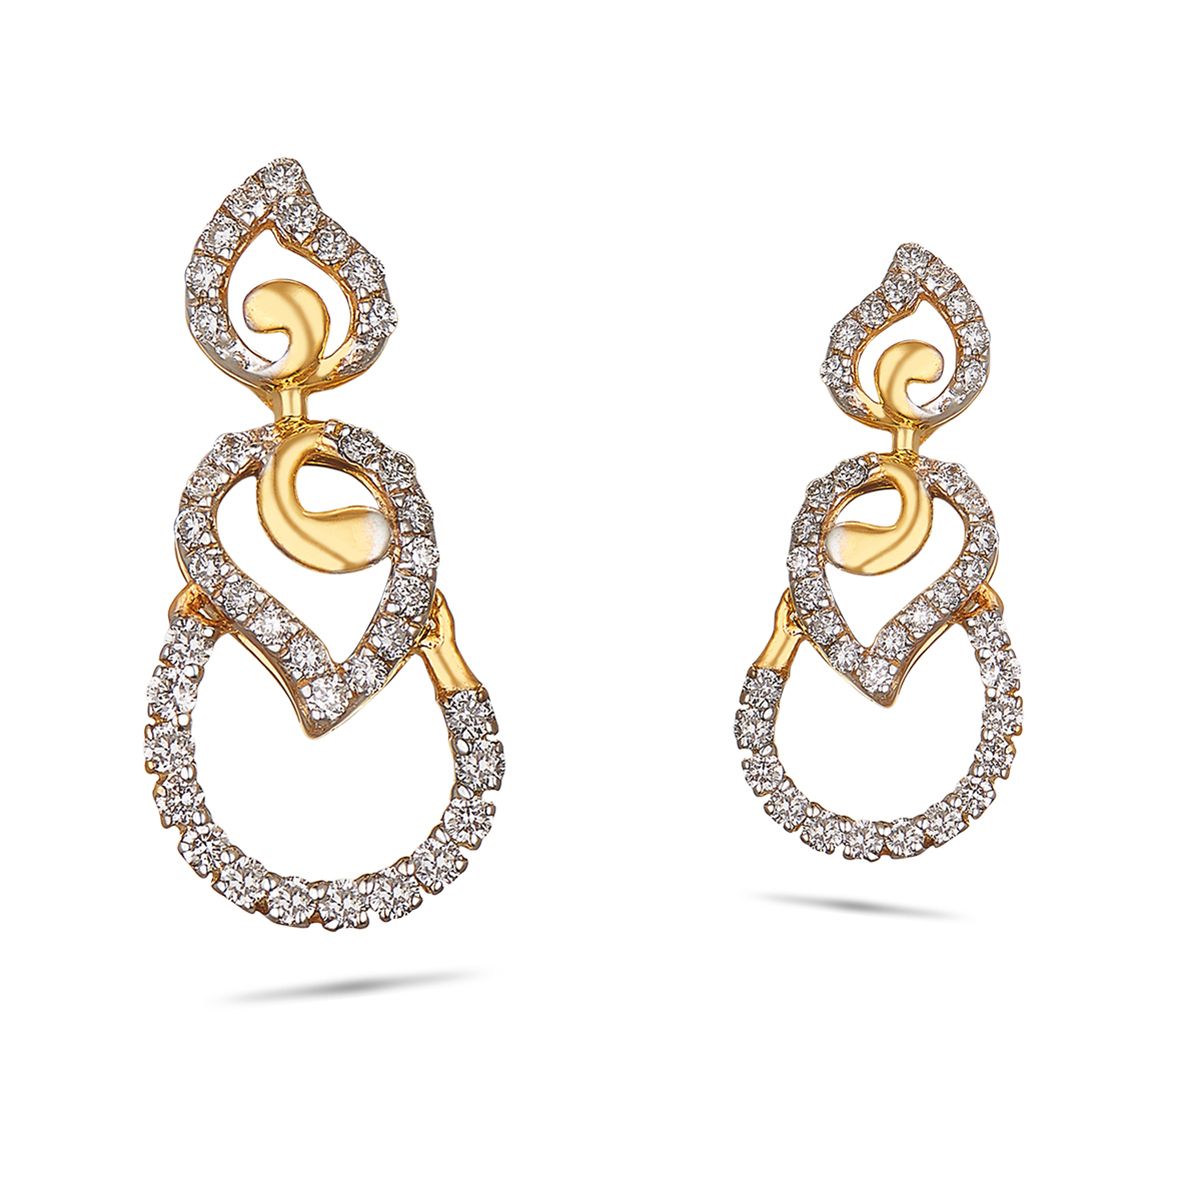 Buy Yellow Gold Earrings for Women by Virinda Online | Ajio.com